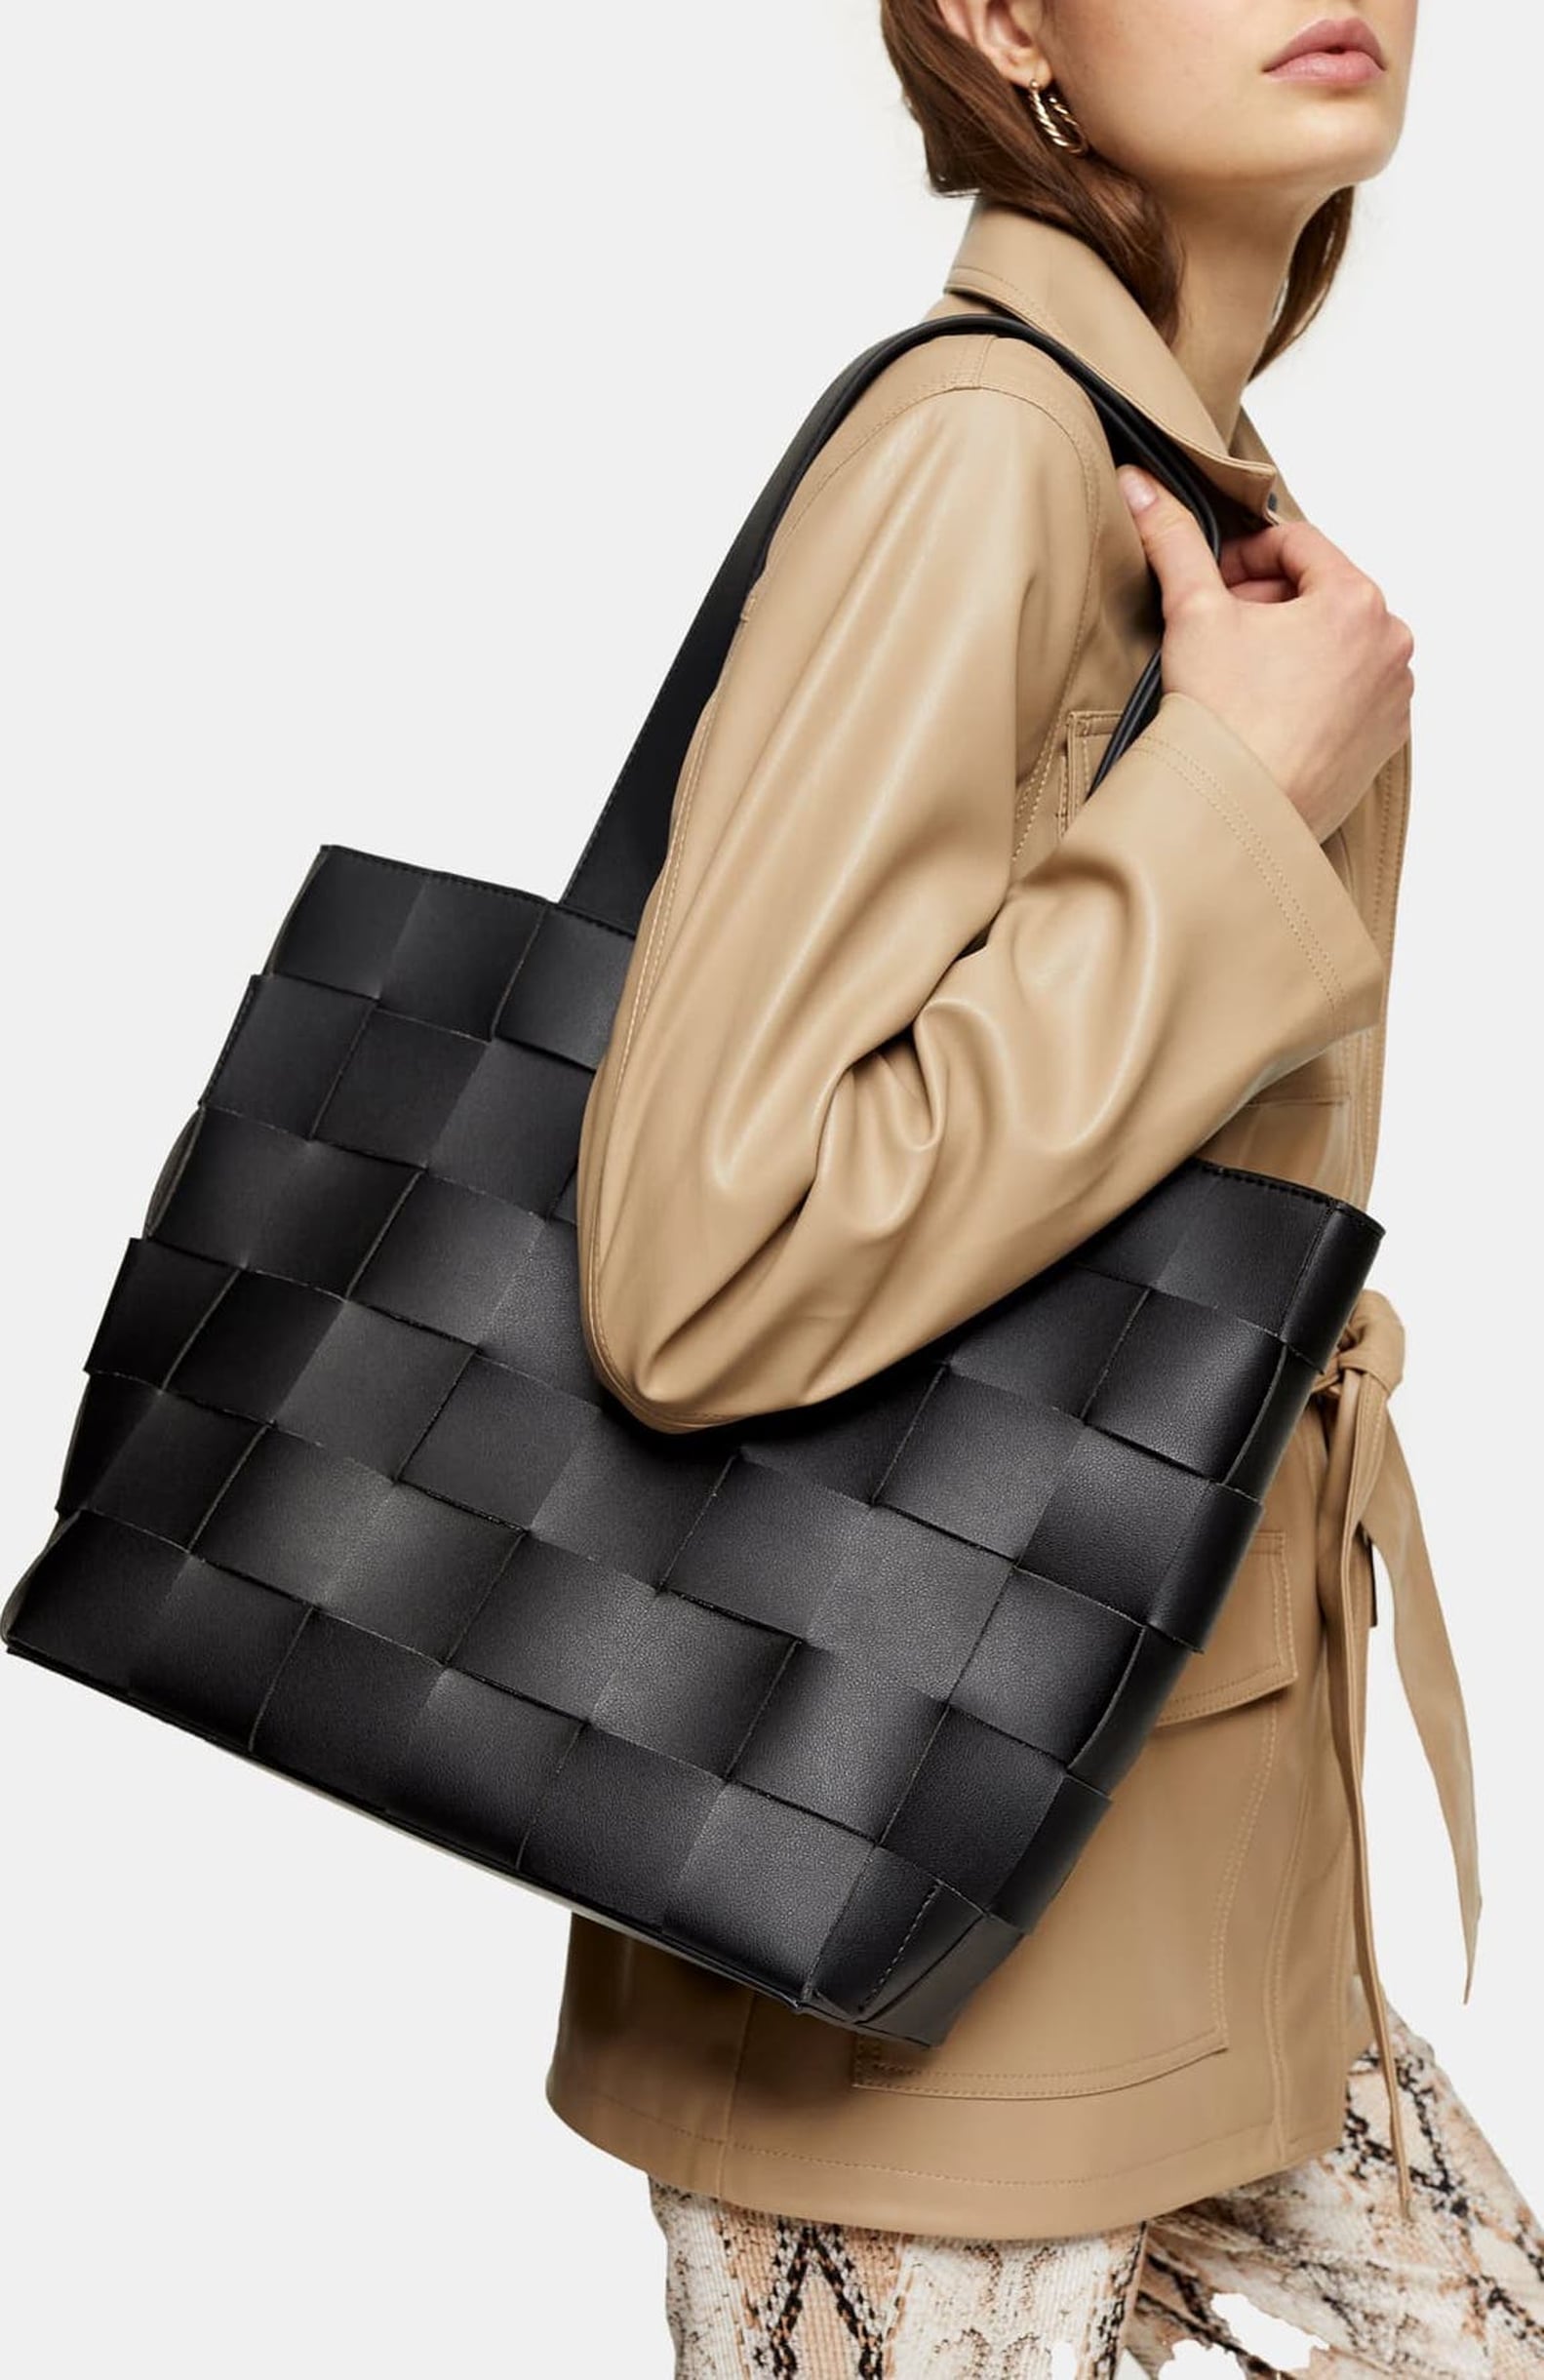 Best Work Bags For Women From Nordstrom | POPSUGAR Fashion